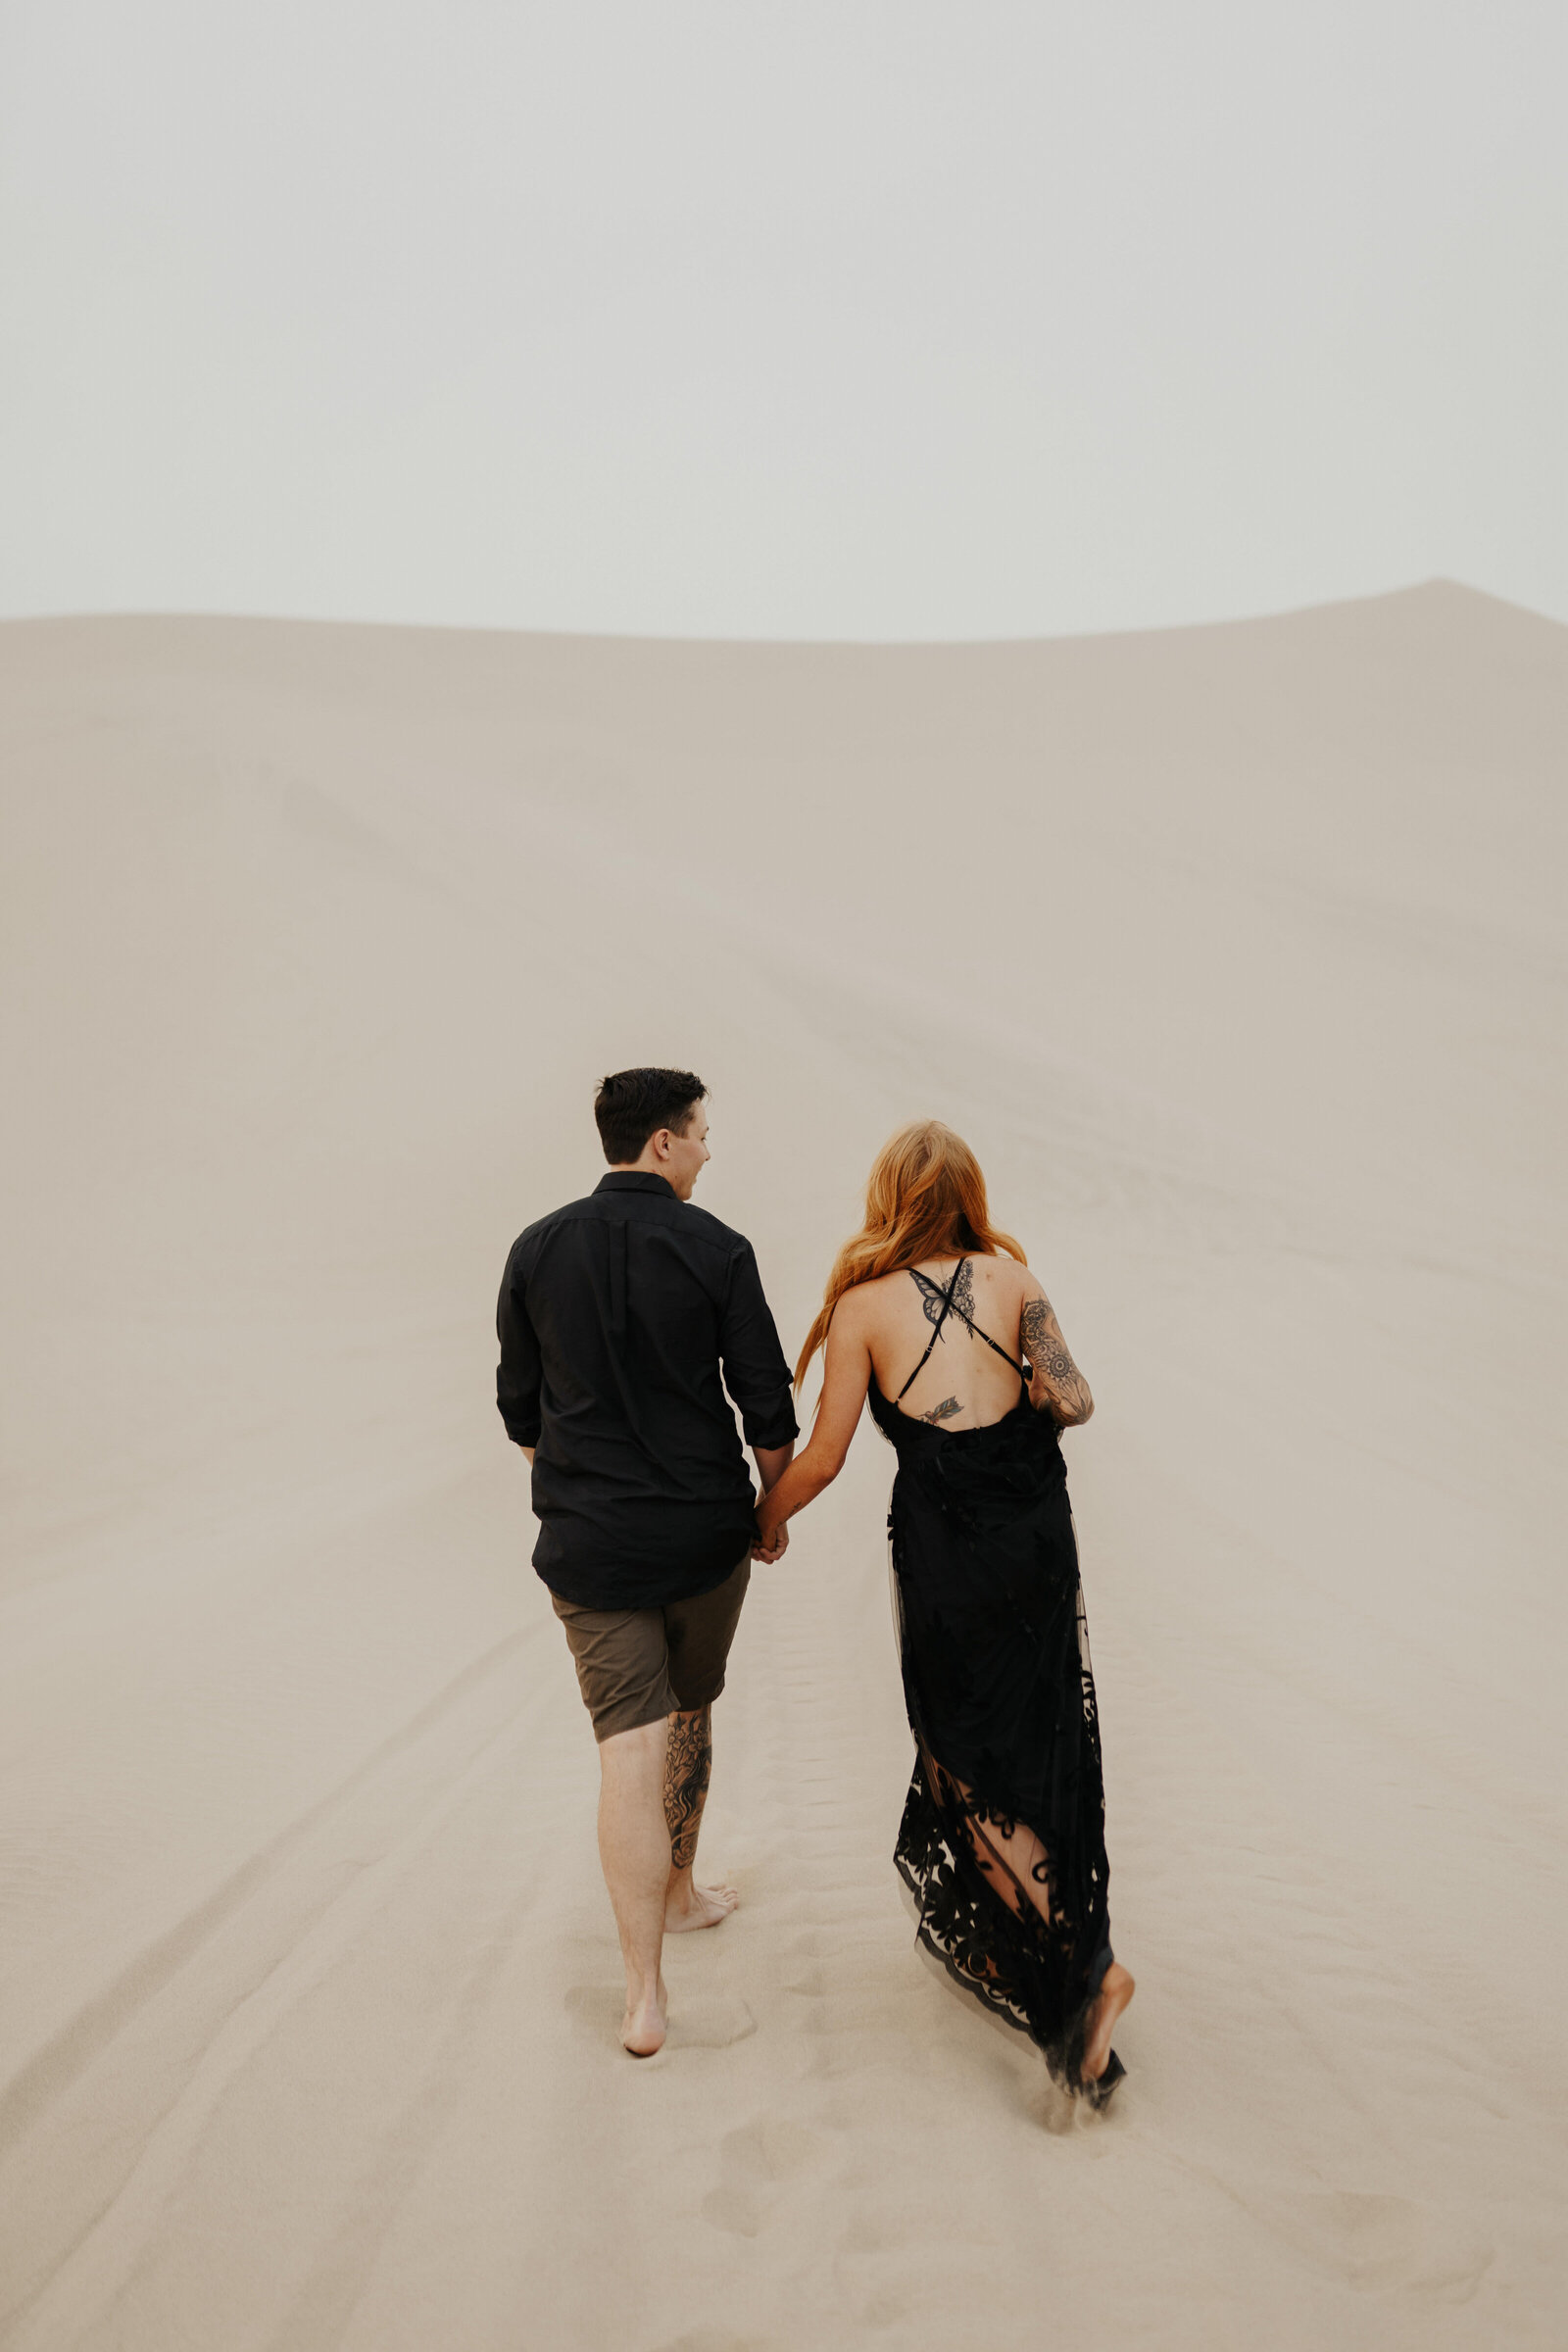 Sand Dunes Couples Photos - Raquel King Photography44